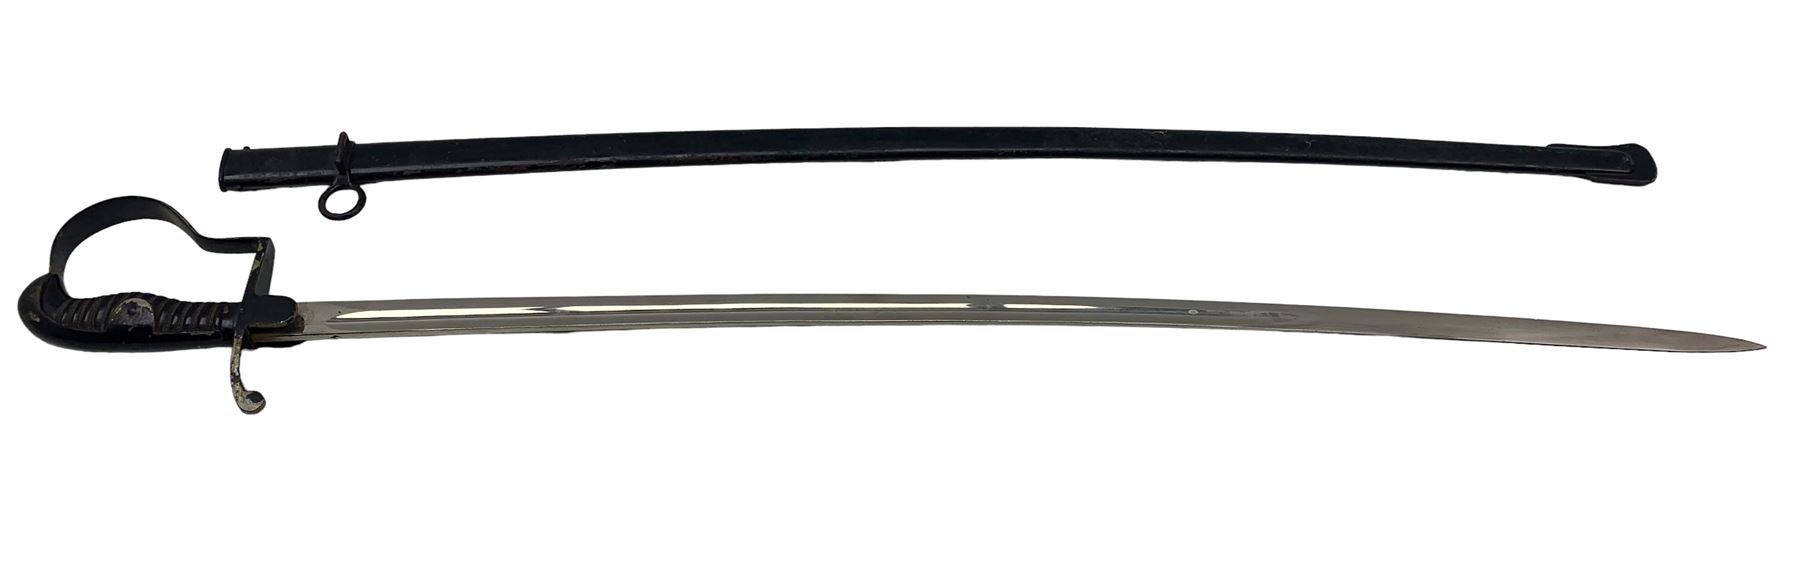 German sword with single edge blade inscribed Carl Eickhorn